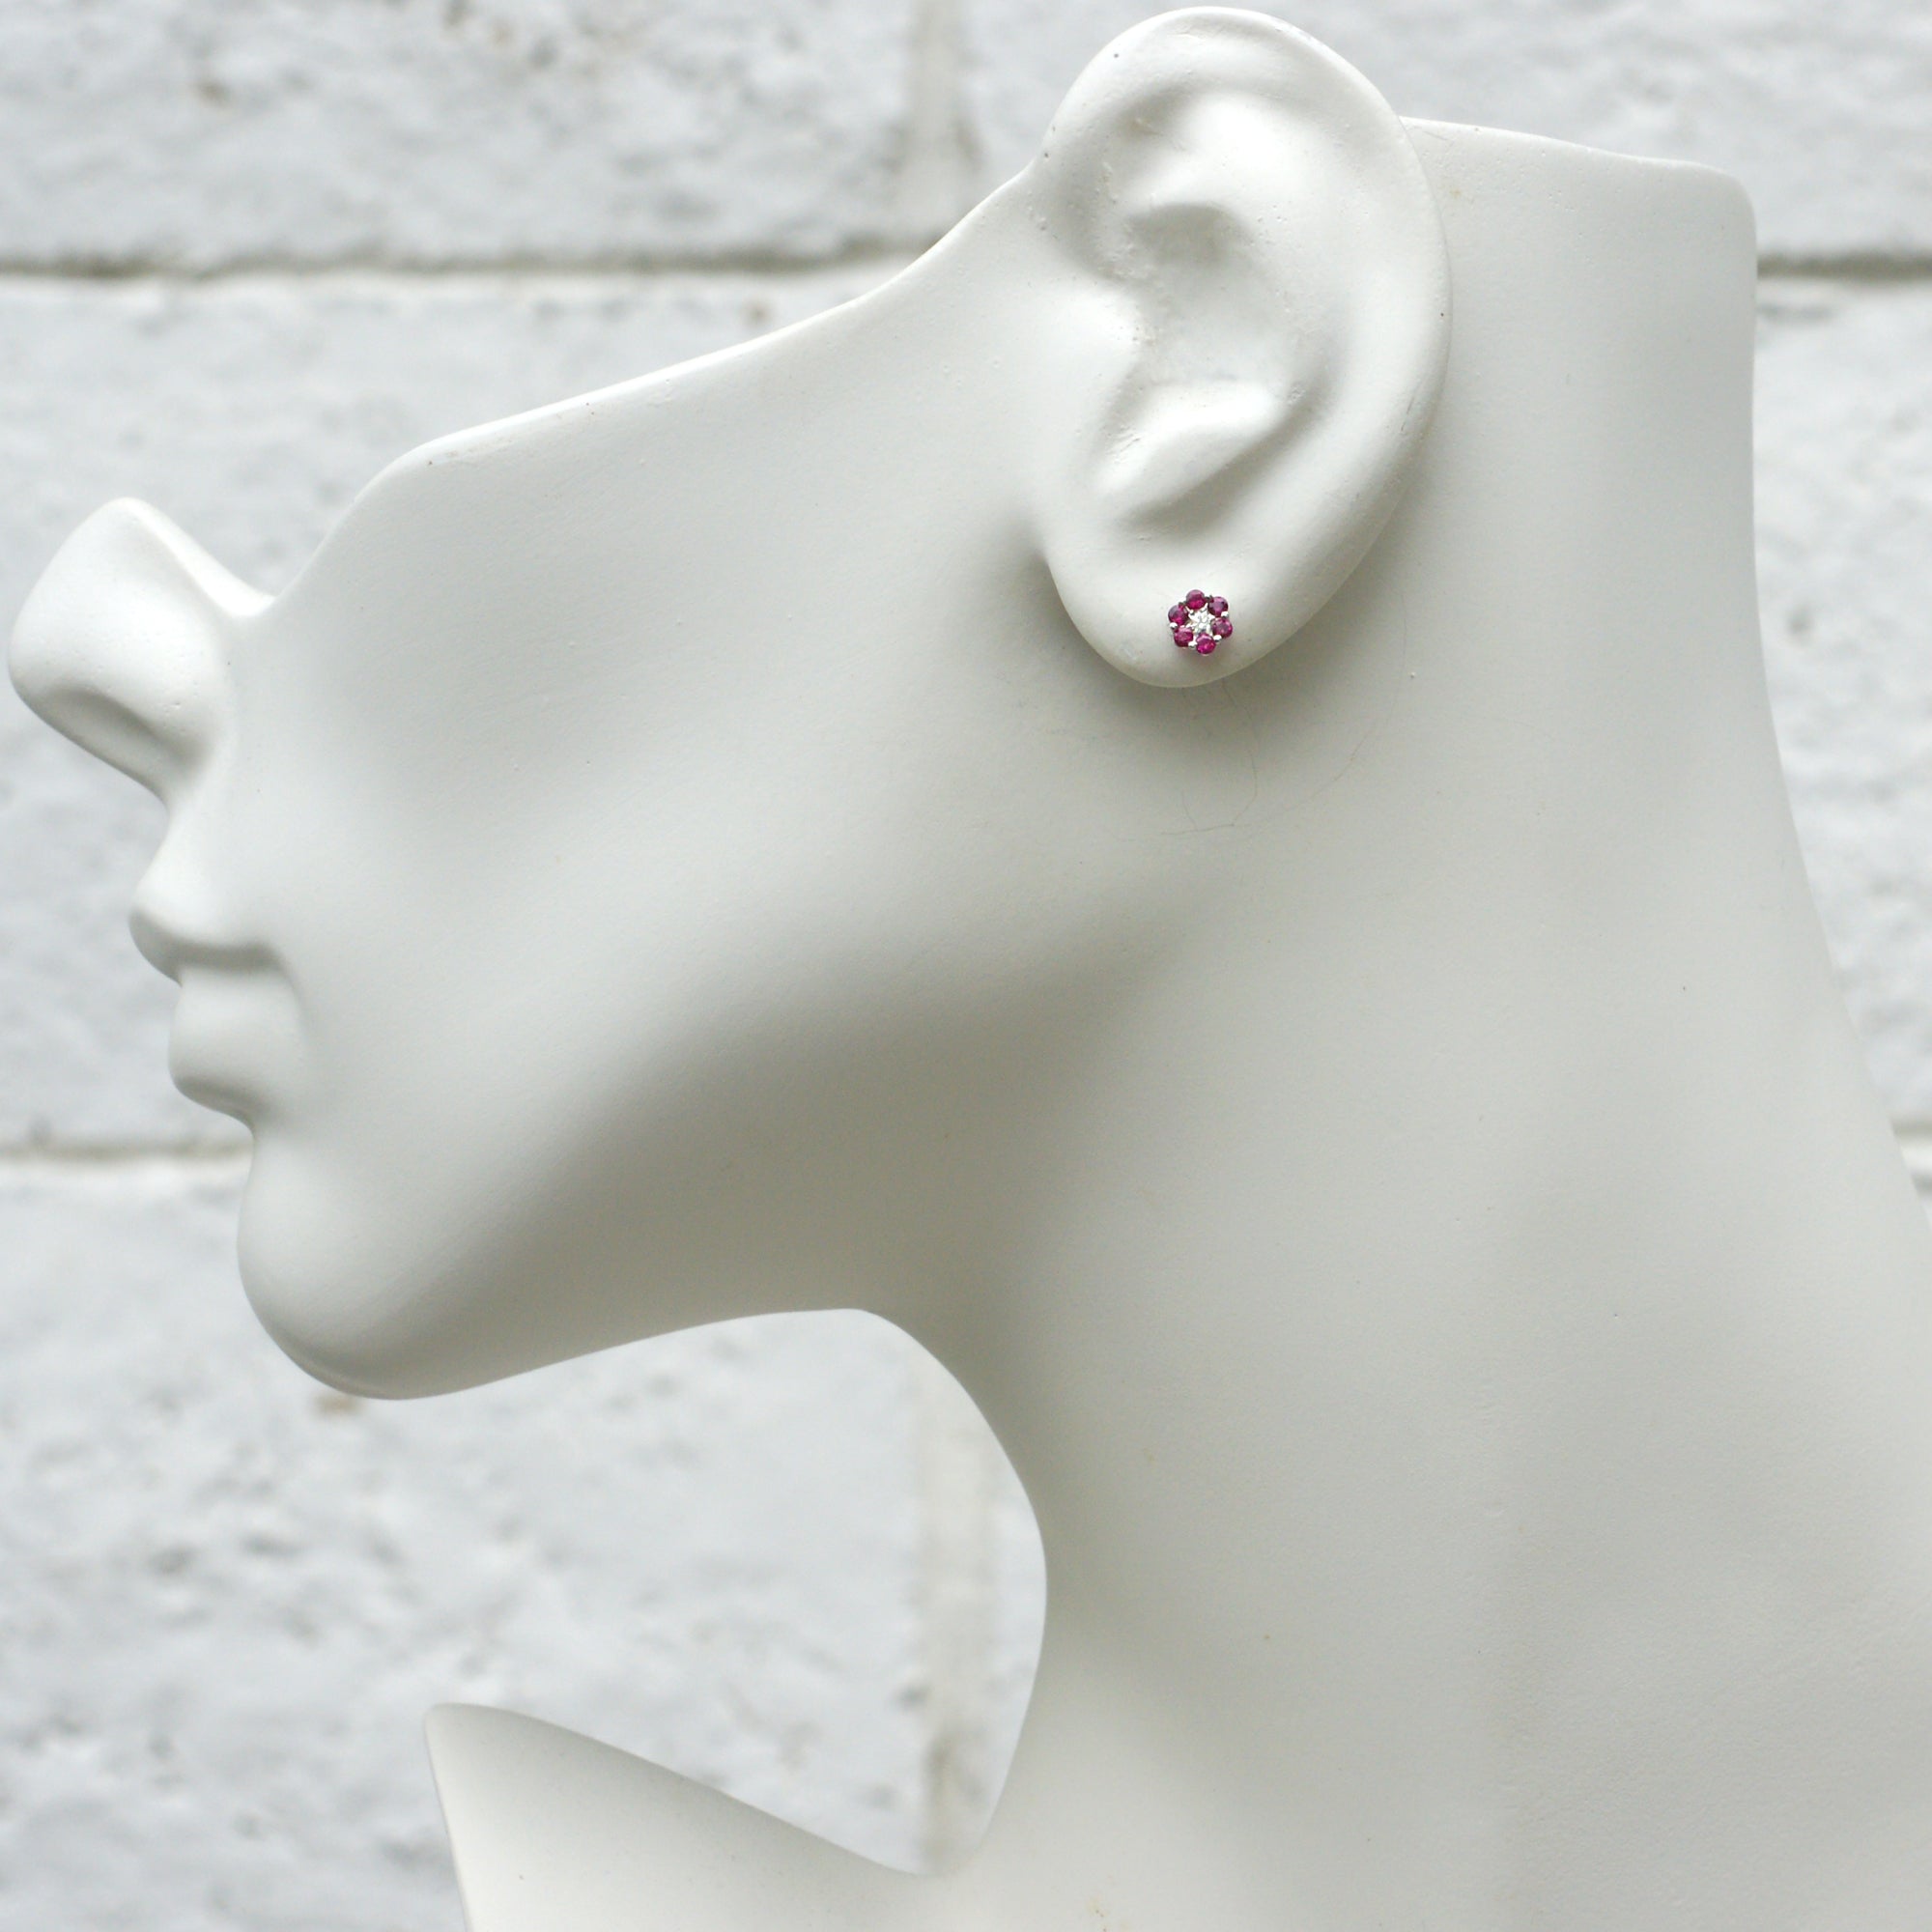 The Flower Ruby And Diamond Stud Earrings